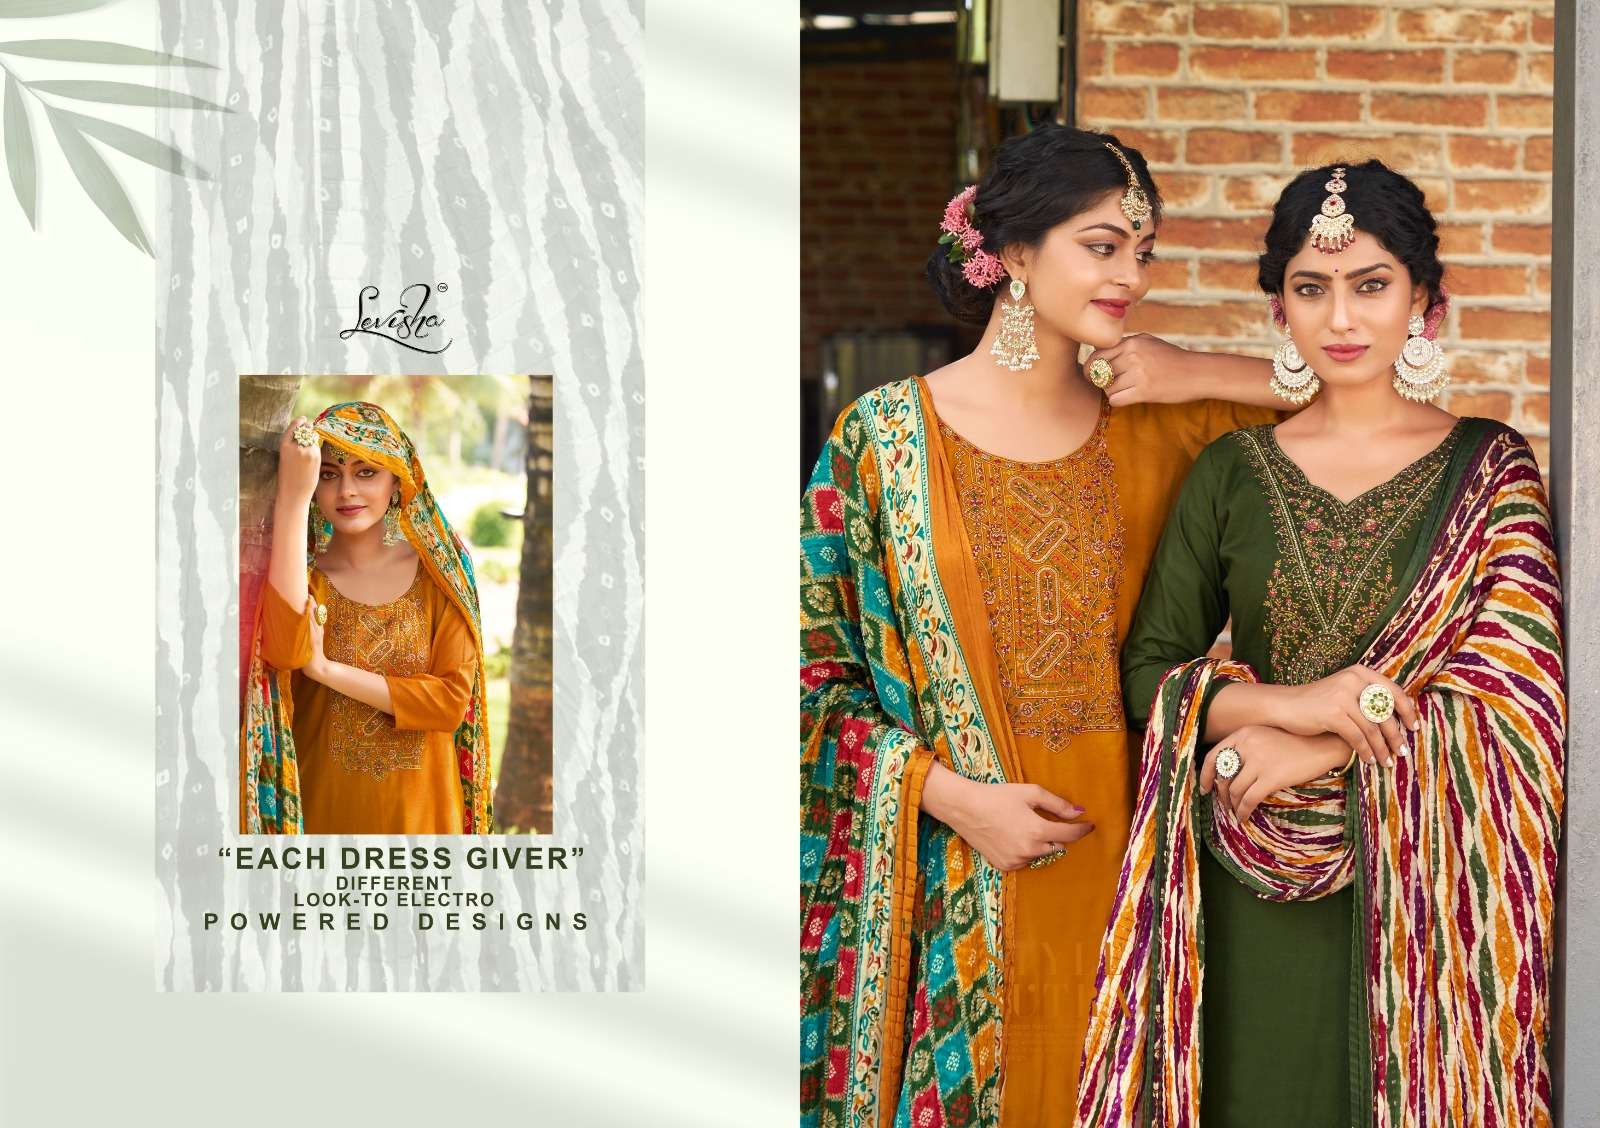 Levisha Nivisha Vol 7 Rayon Slub Dress Material Wholesale catalog